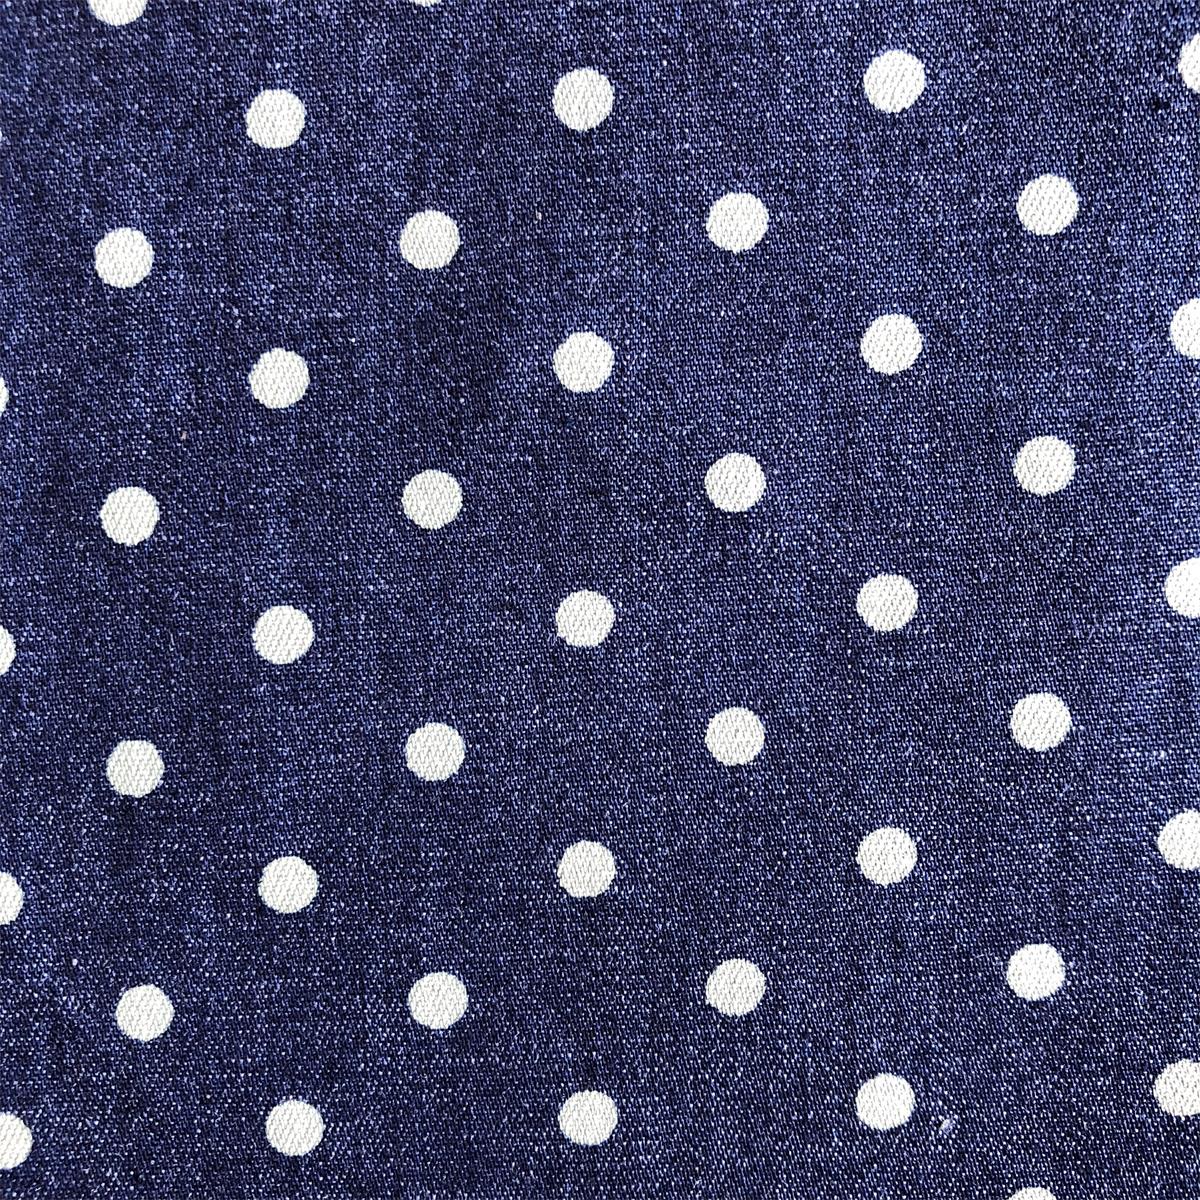 Denim Fabric by indigo yarn woven for men's casual shirts 100% cotton twill denim discharge printed shirts woven fabric